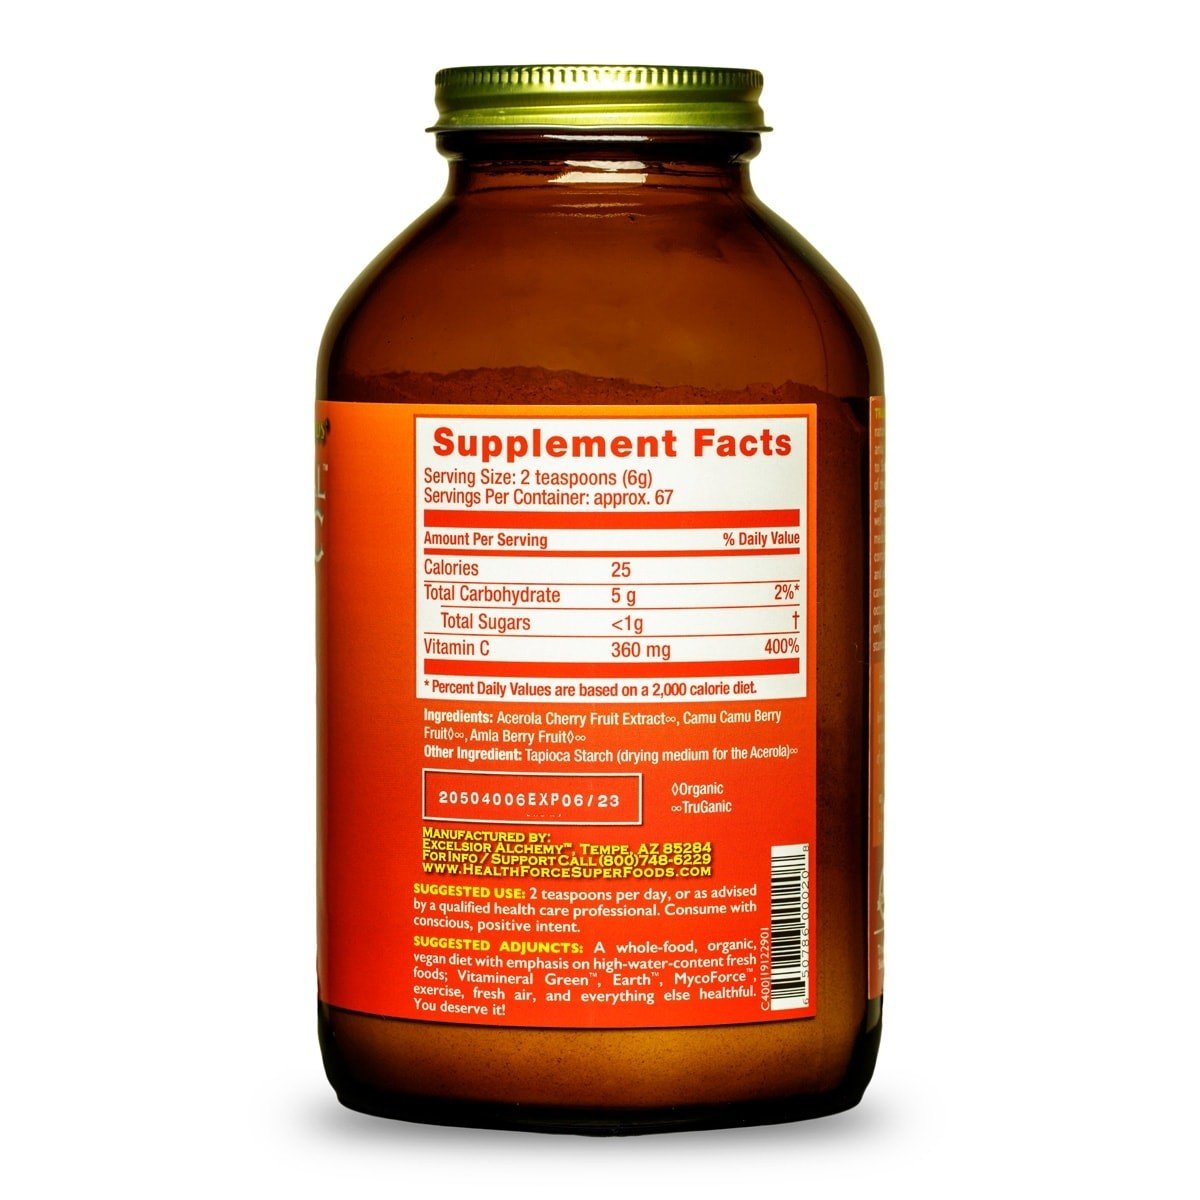 HealthForce Superfoods Truly Natural Vitamin C 400 g Powder